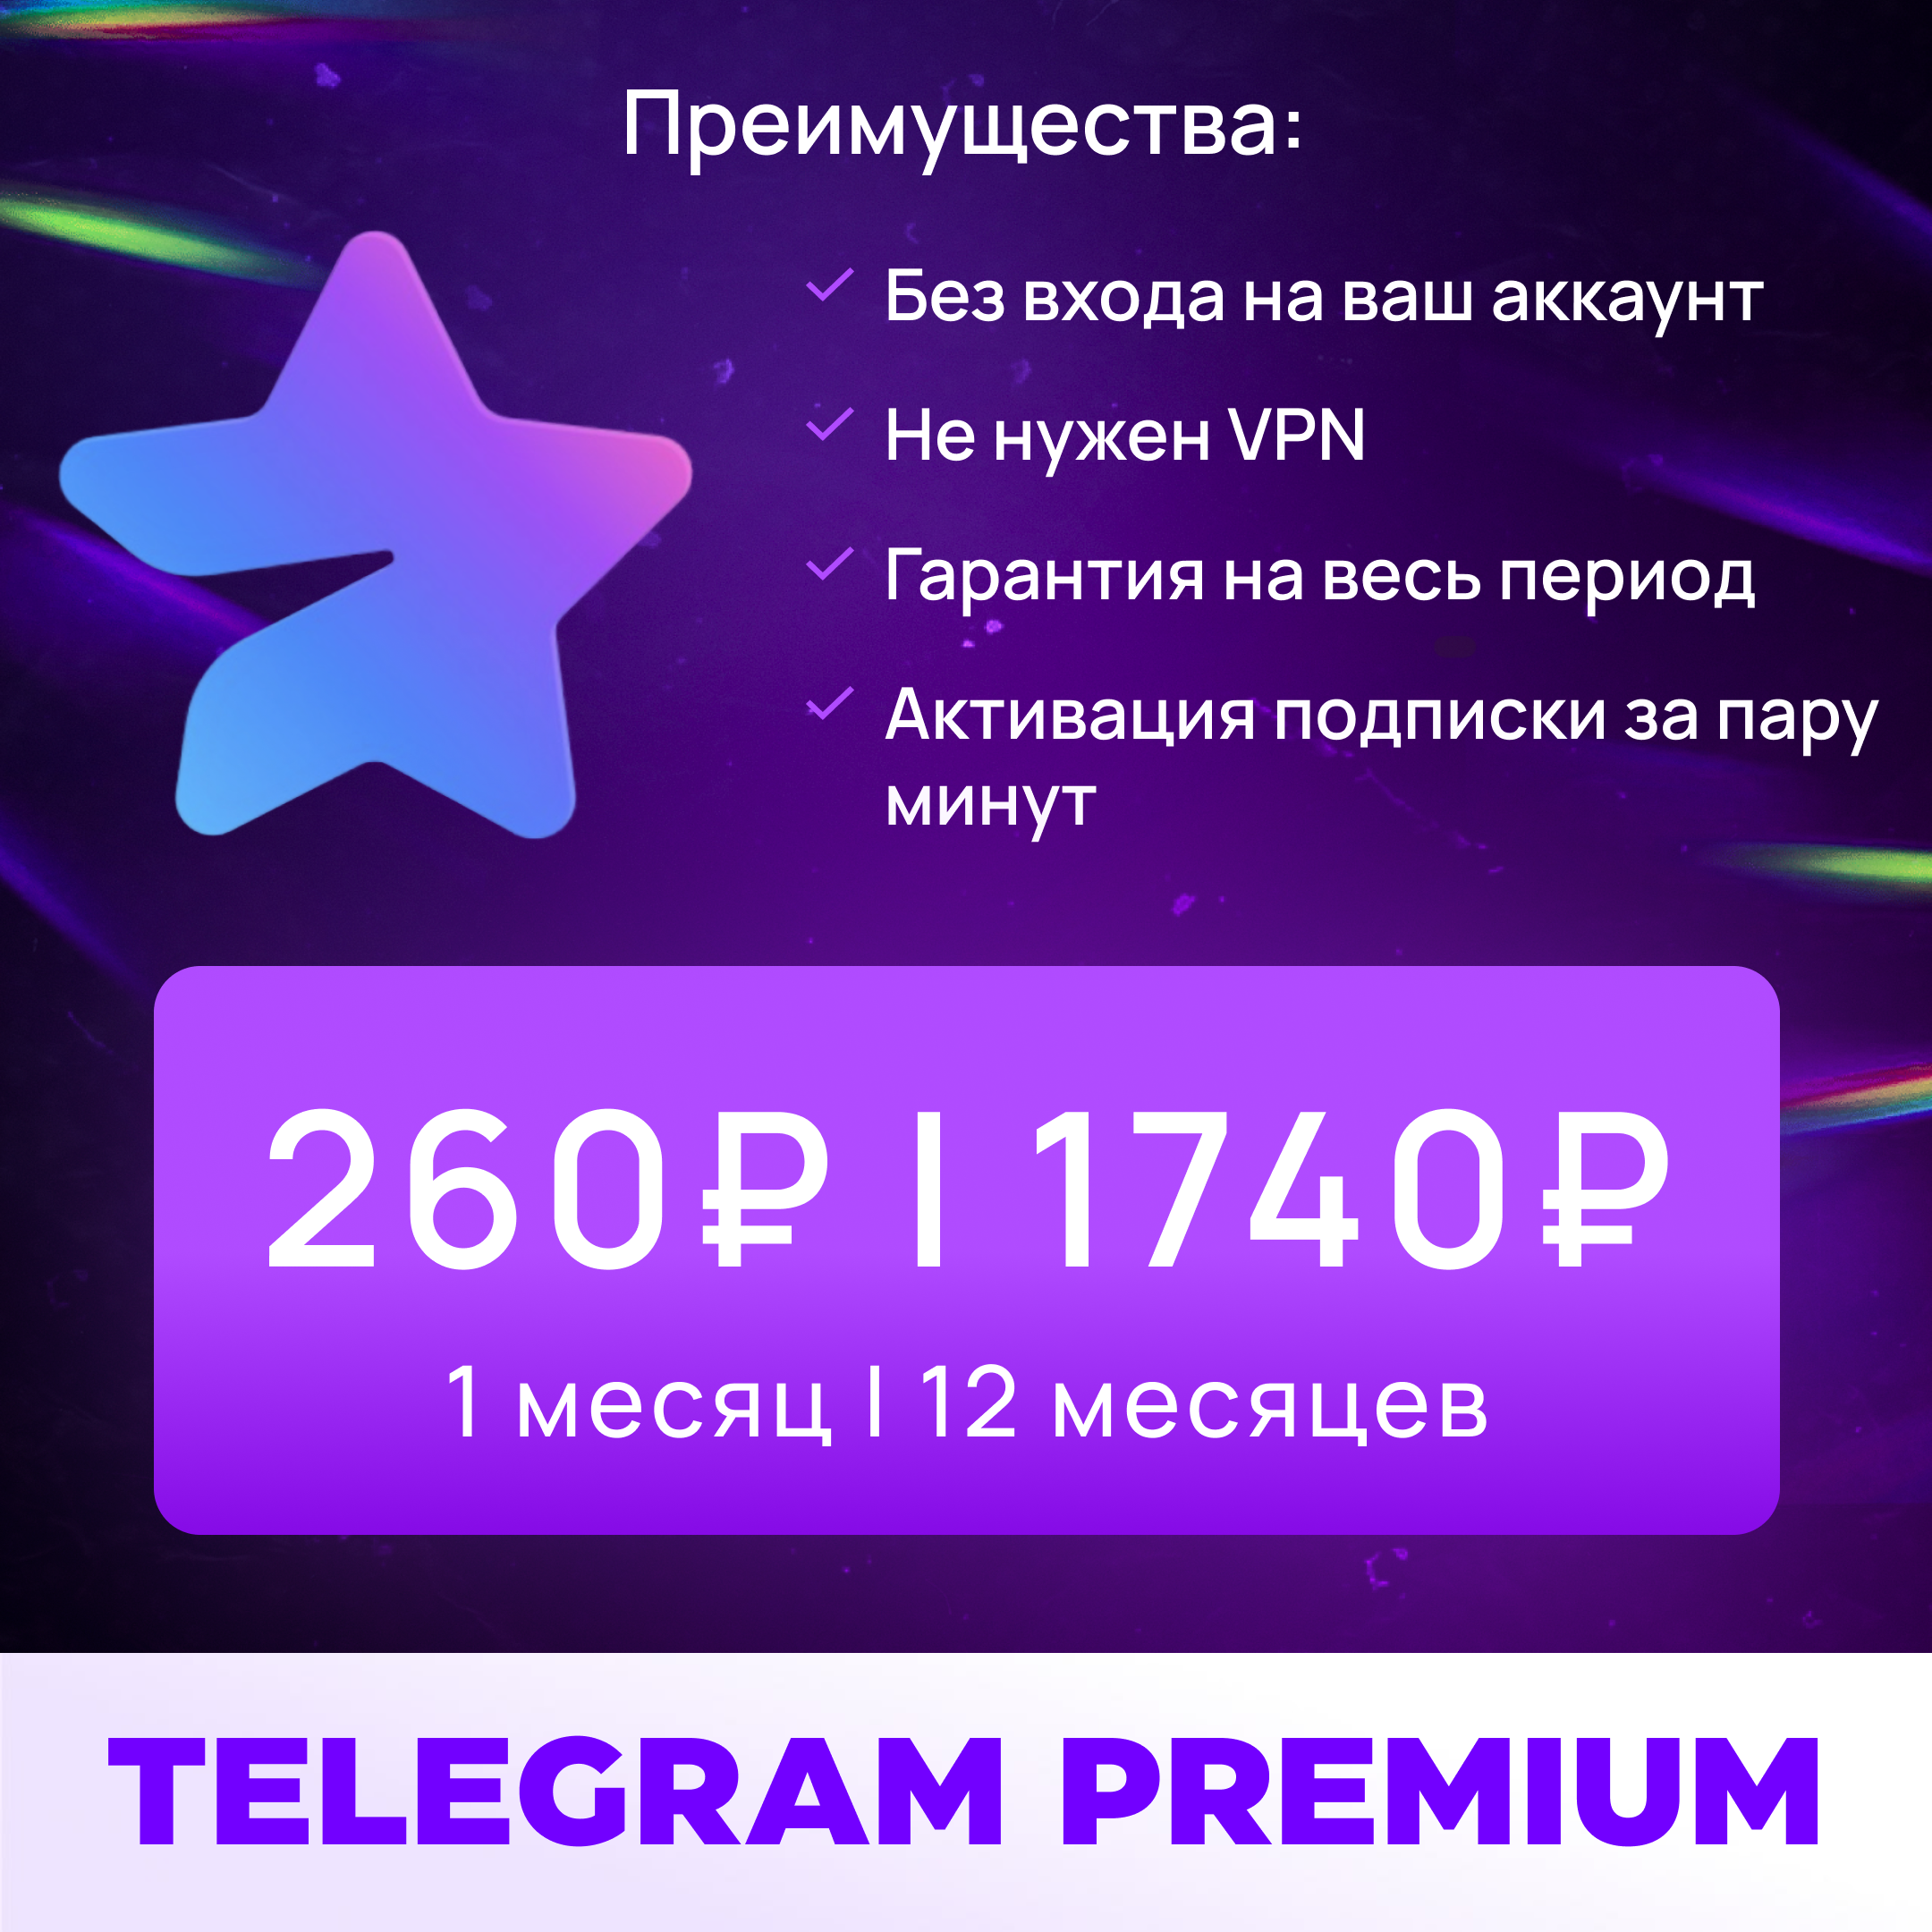 Телеграмм премиум купить бесплатно на андроид фото 111